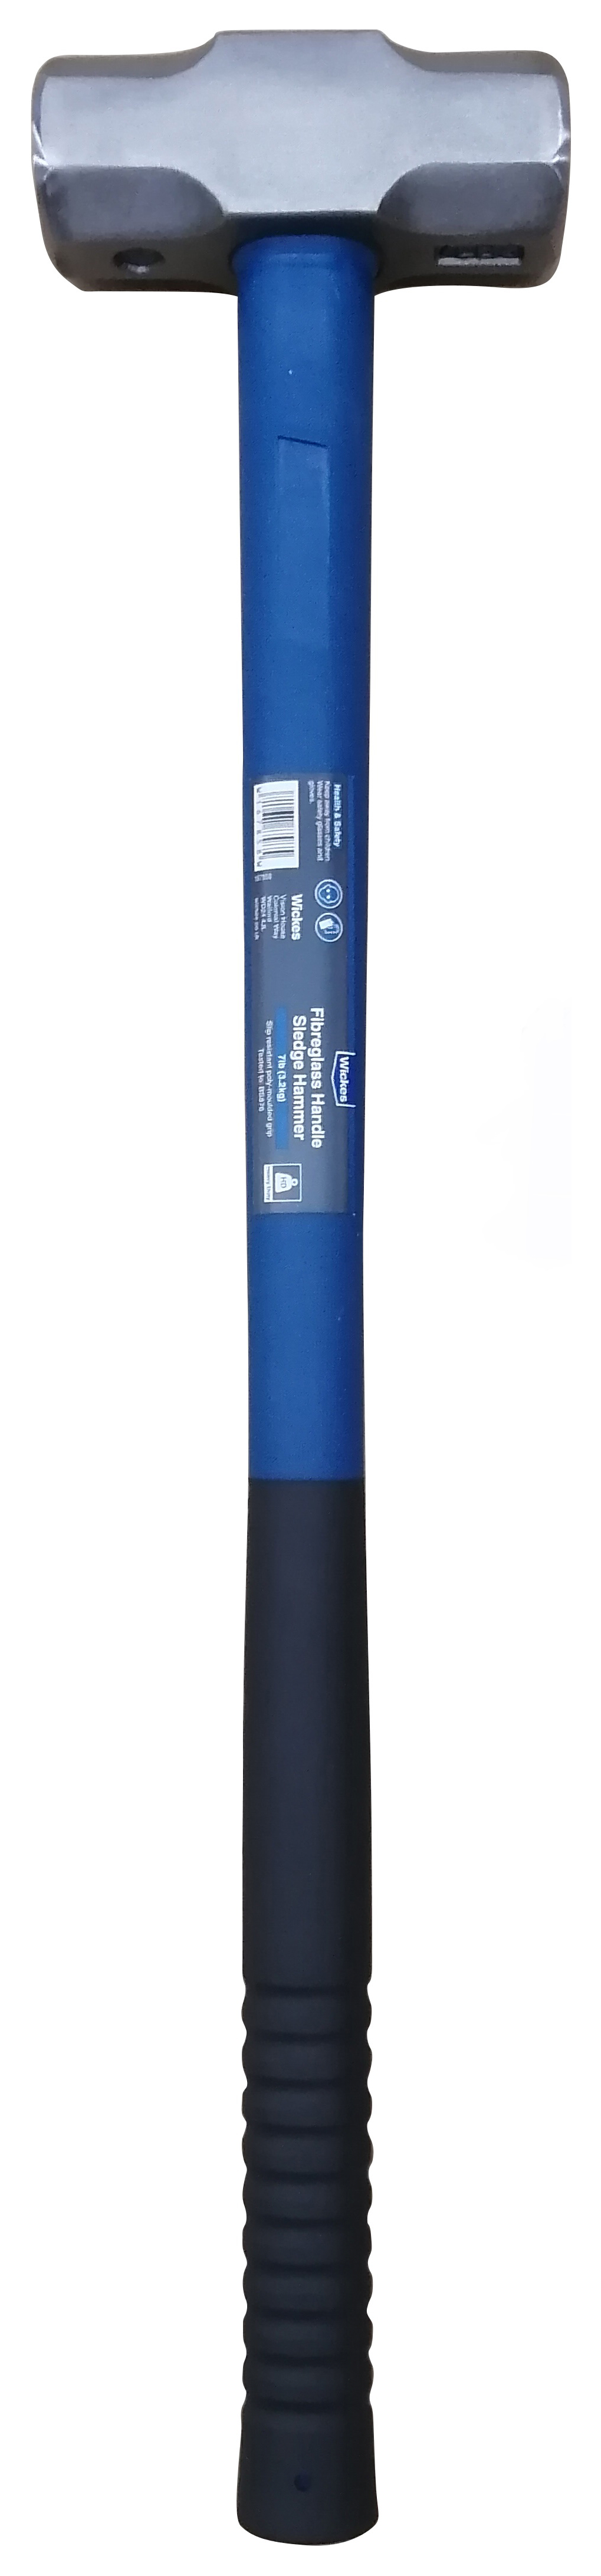 Image of Wickes Powastrike Sledge Hammer - 7lb